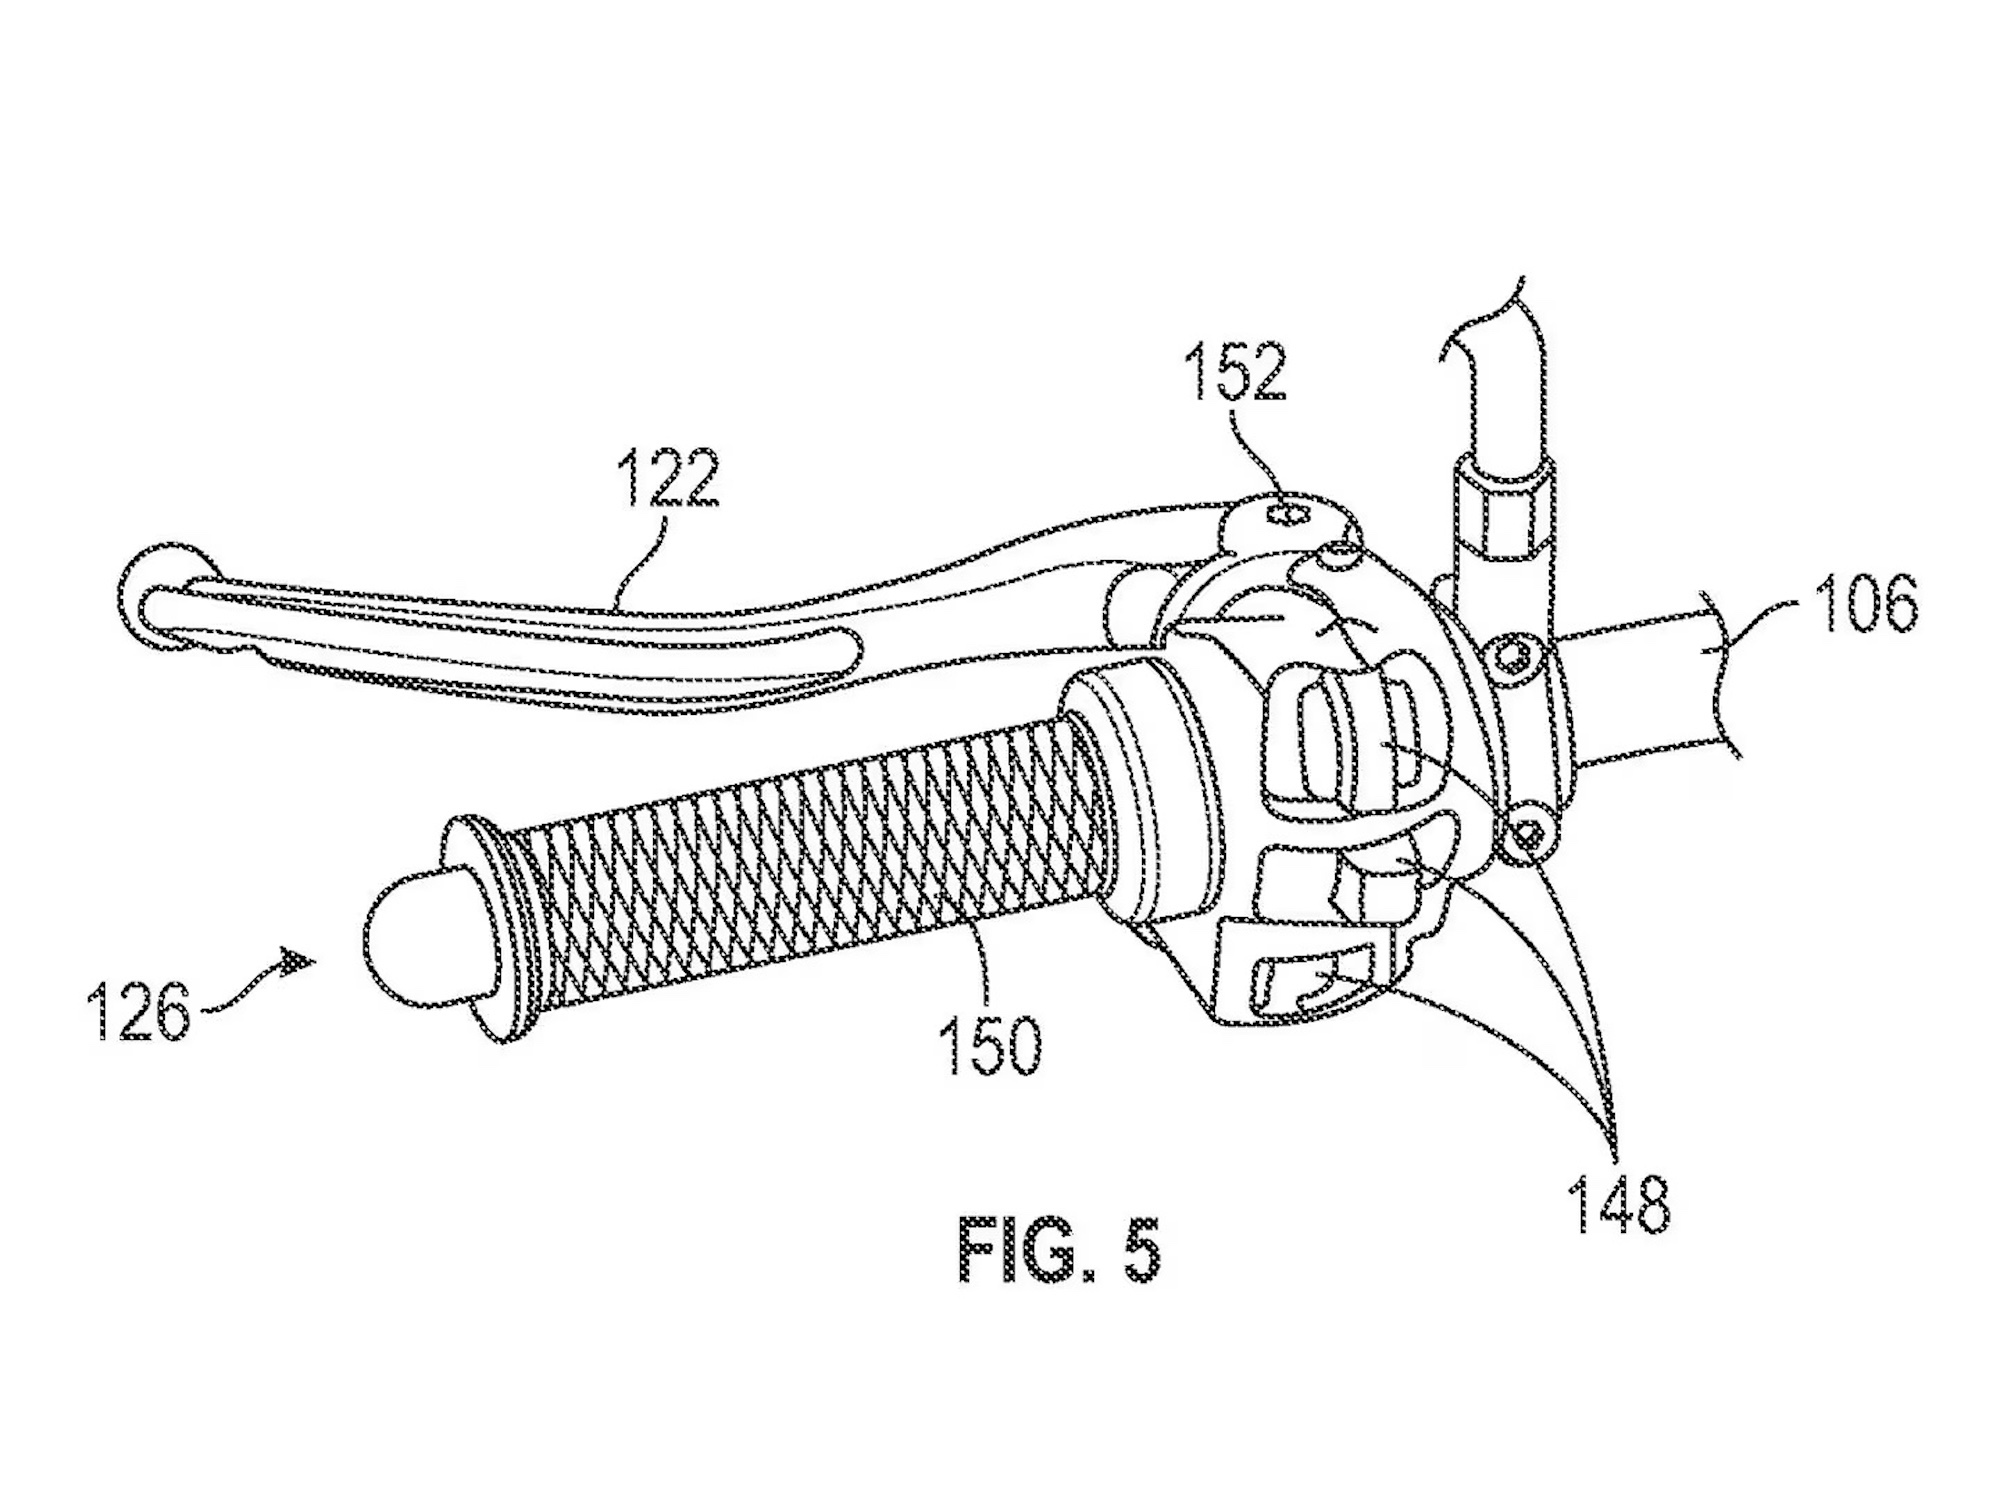 A digital blueprint rendering of a motorcycle handle.